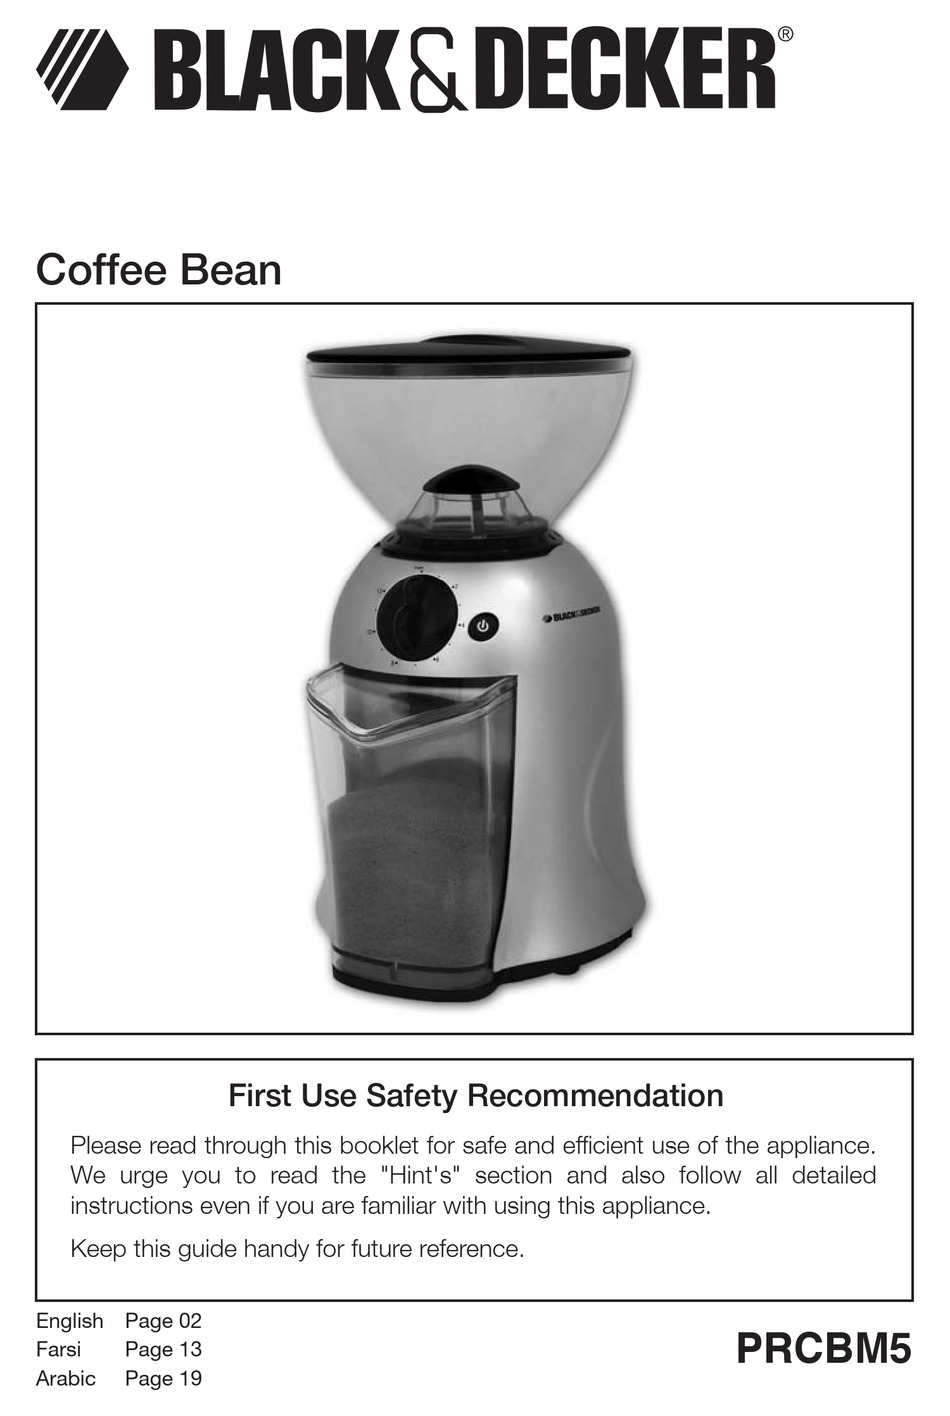 https://data2.manualslib.com/first-image/i1/2/165/16443/black-decker-coffee-bean-prcbm5.jpg